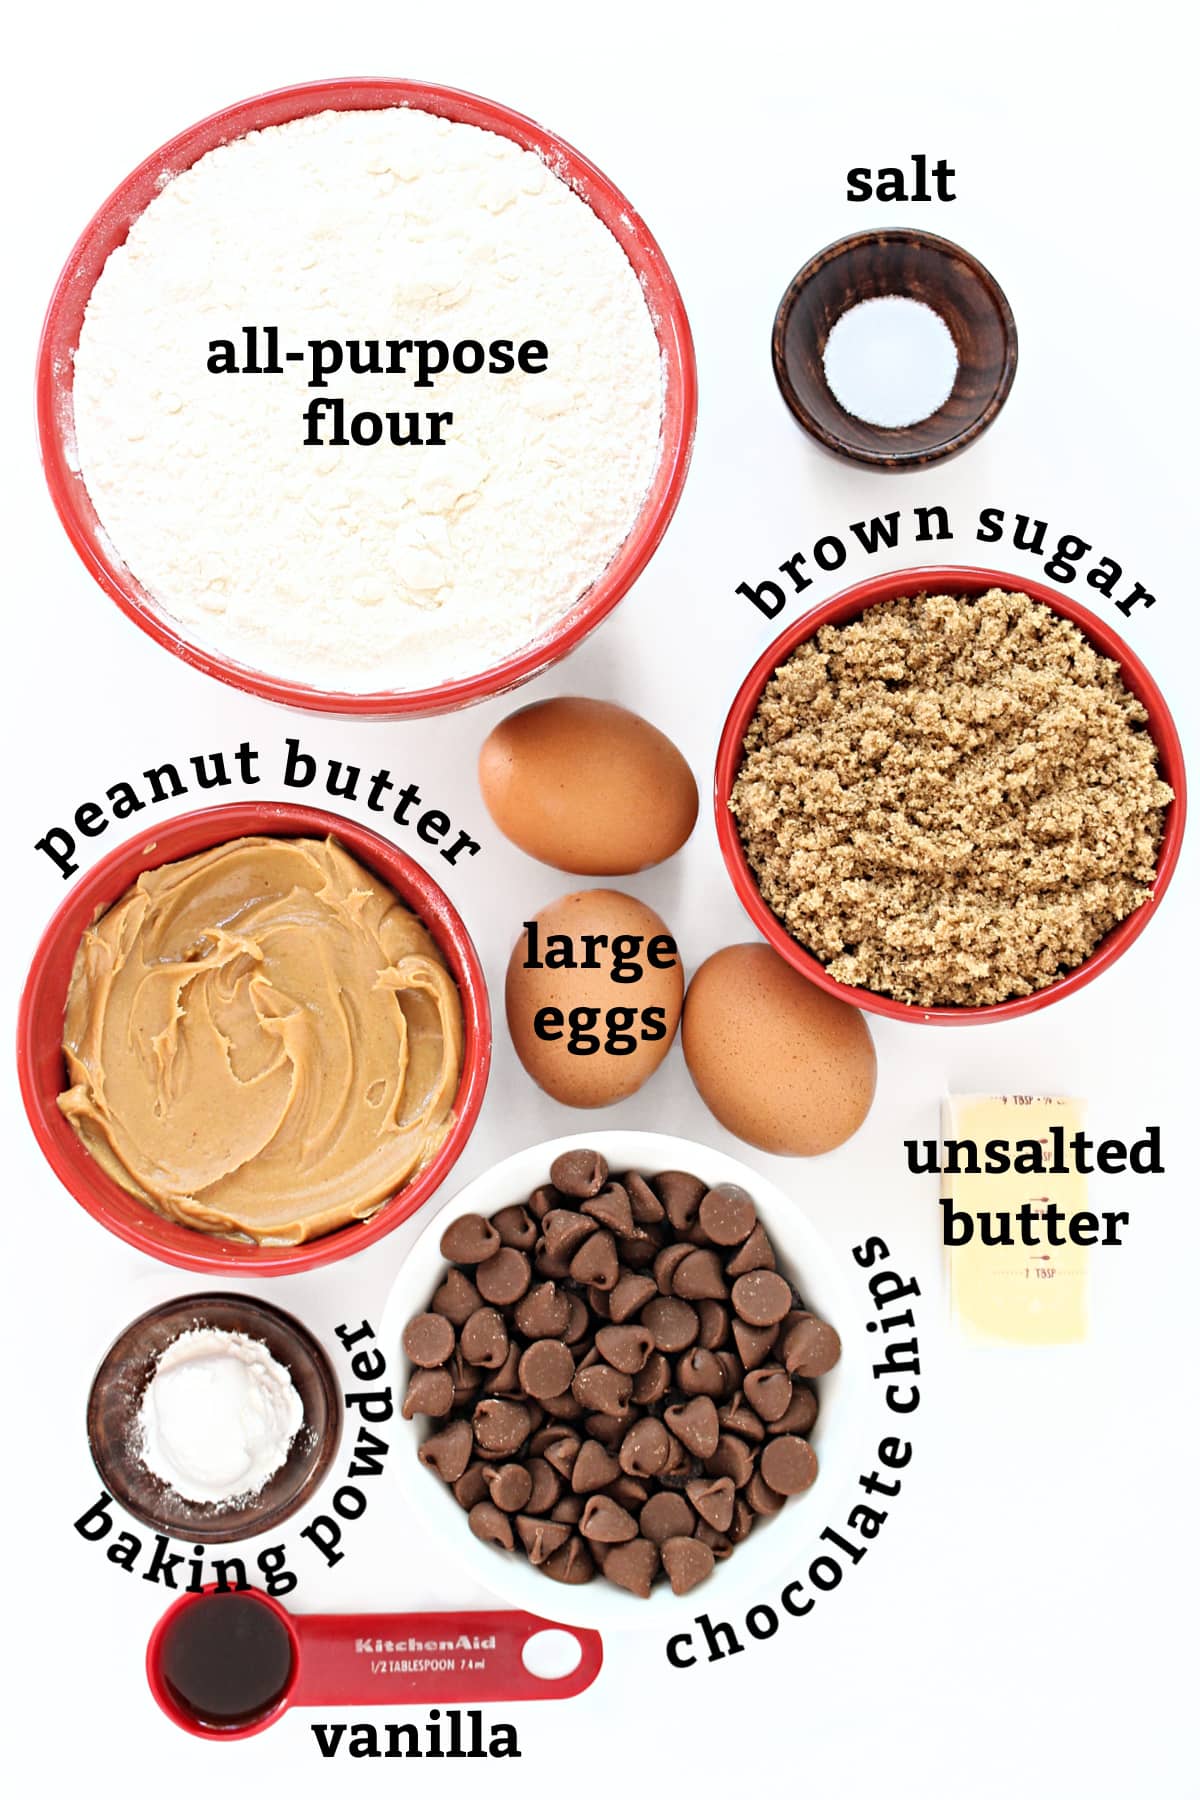 Ingredients labeled; flour, salt, peanut butter, eggs, brown sugar, baking powder, chocolate chips, unsalted butter, vanilla.